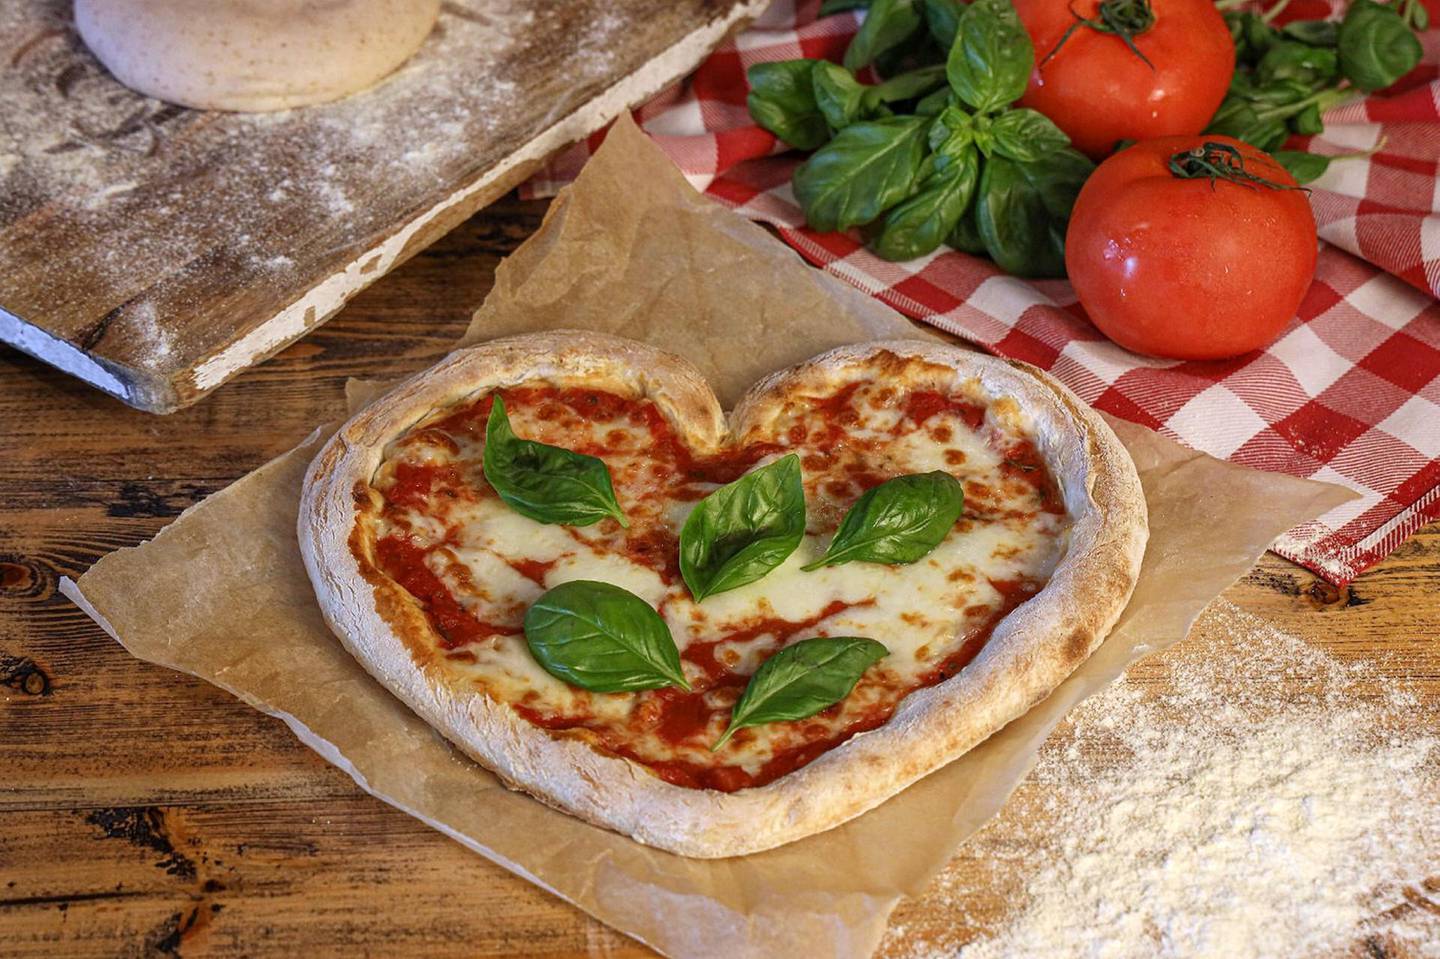 Tuck into heart-shaped pizzas at Trattoria. Courtesy Trattoria